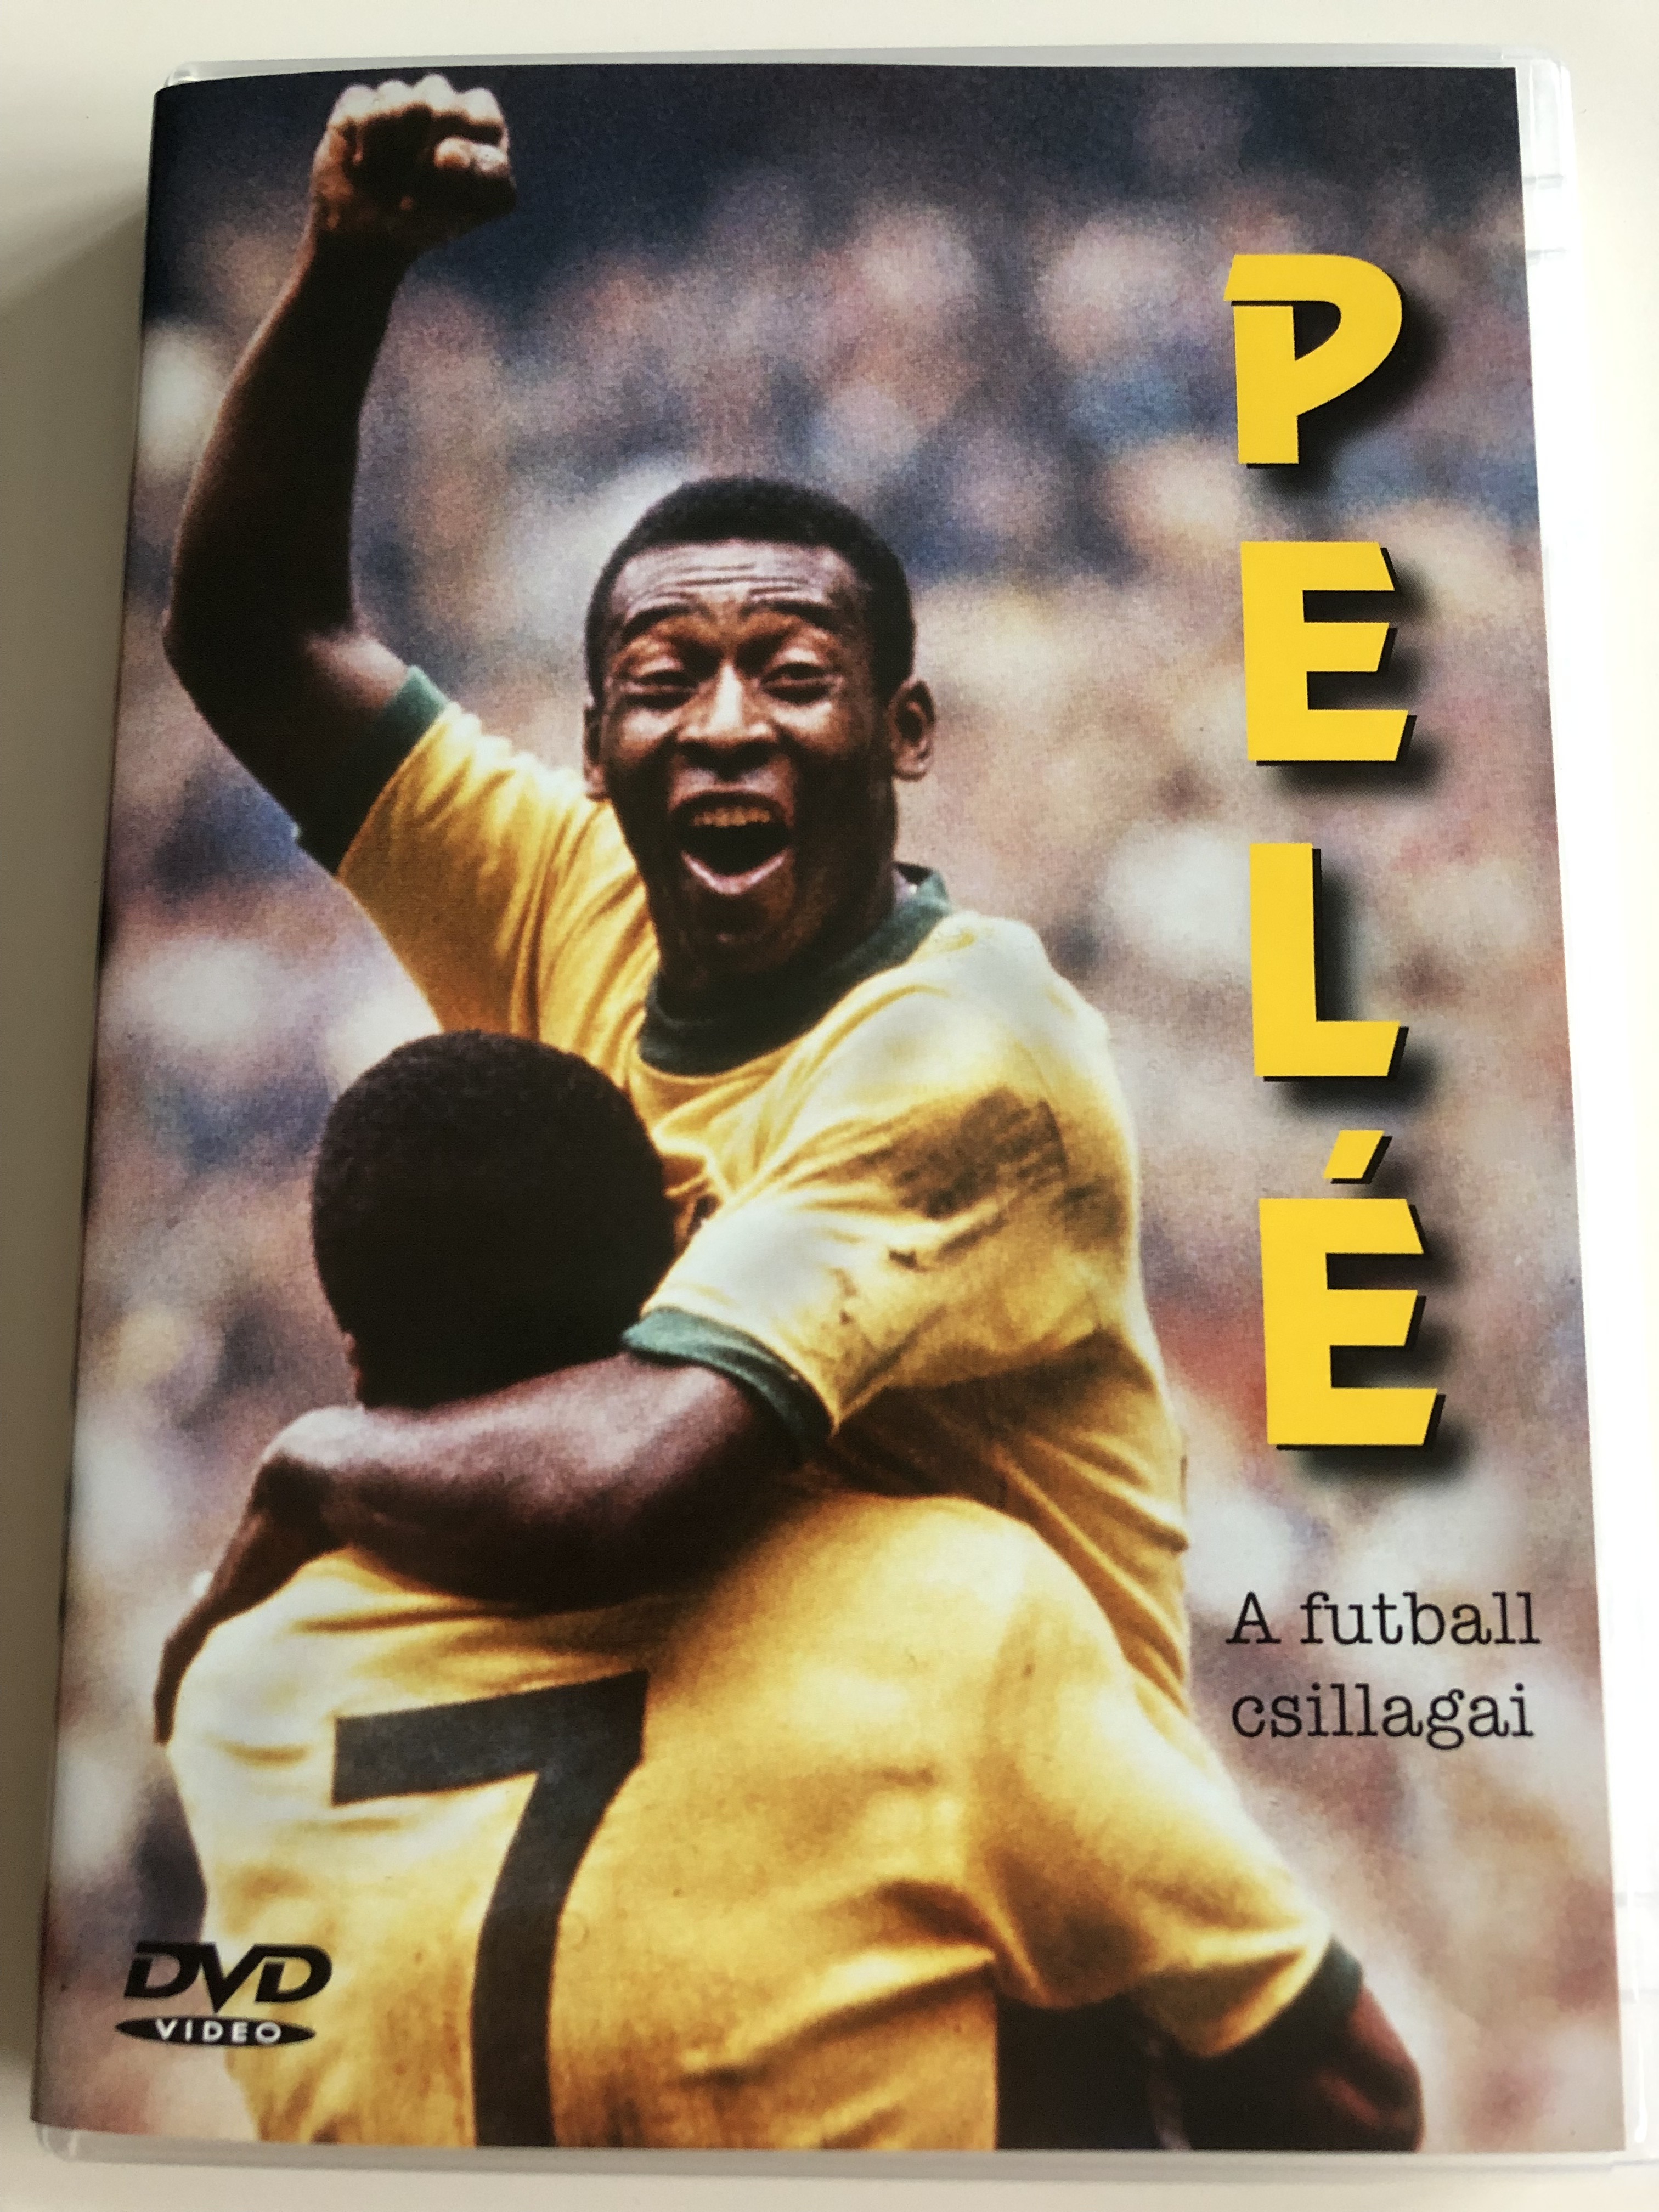 A Futball csillagai - Pelé DVD 2006 Stars of Soccer - Pelé / Documentary  about the soccer legend Pelé - bibleinmylanguage